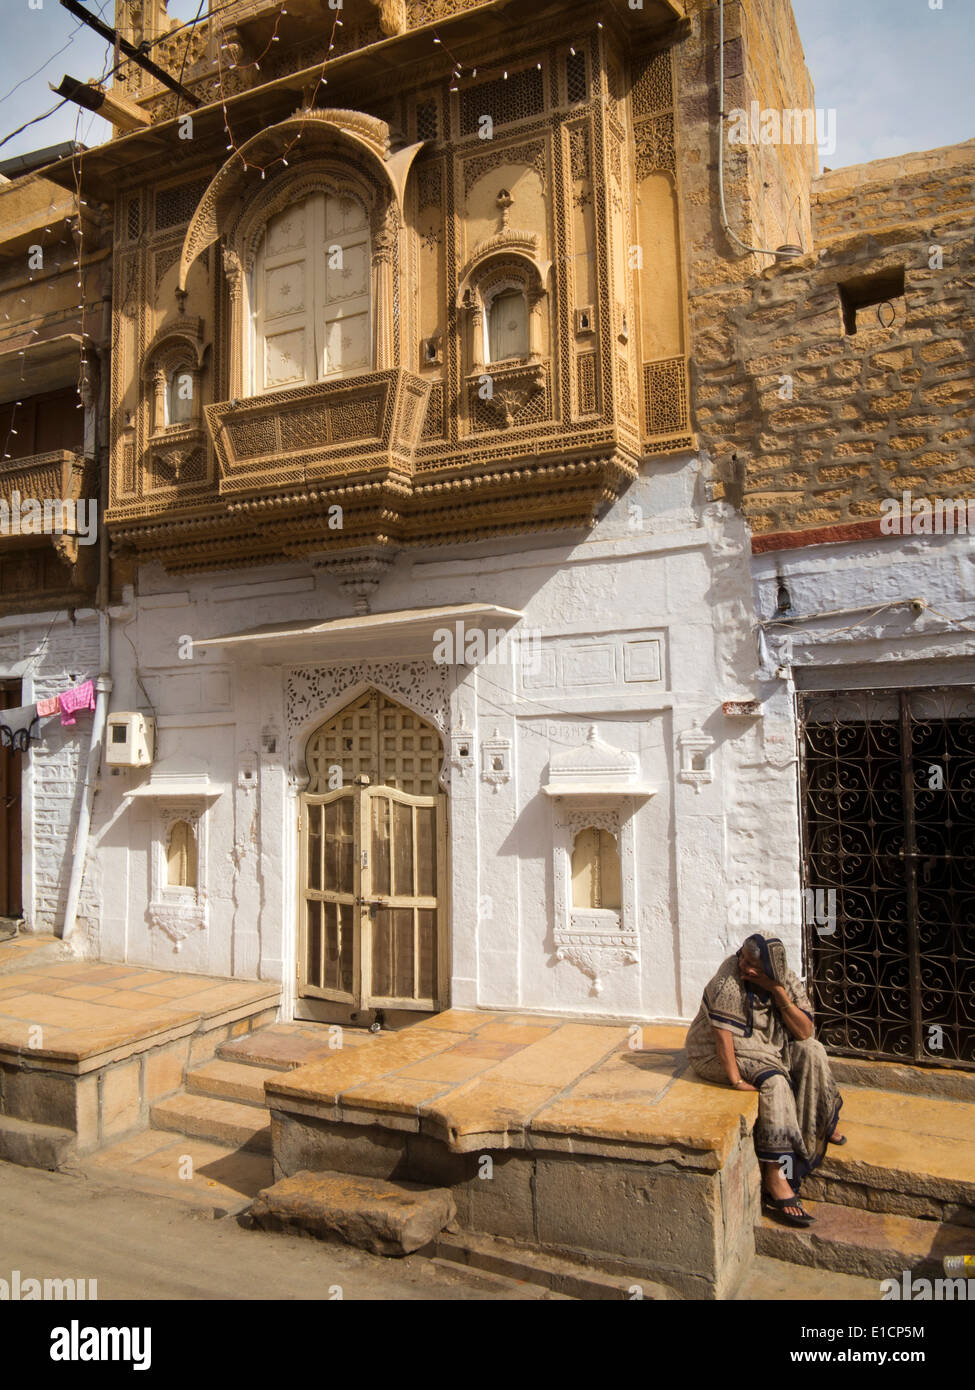 India, Rajasthan, Jaisalmer, woman sat outside decoratively carved sandstone façade house Stock Photo